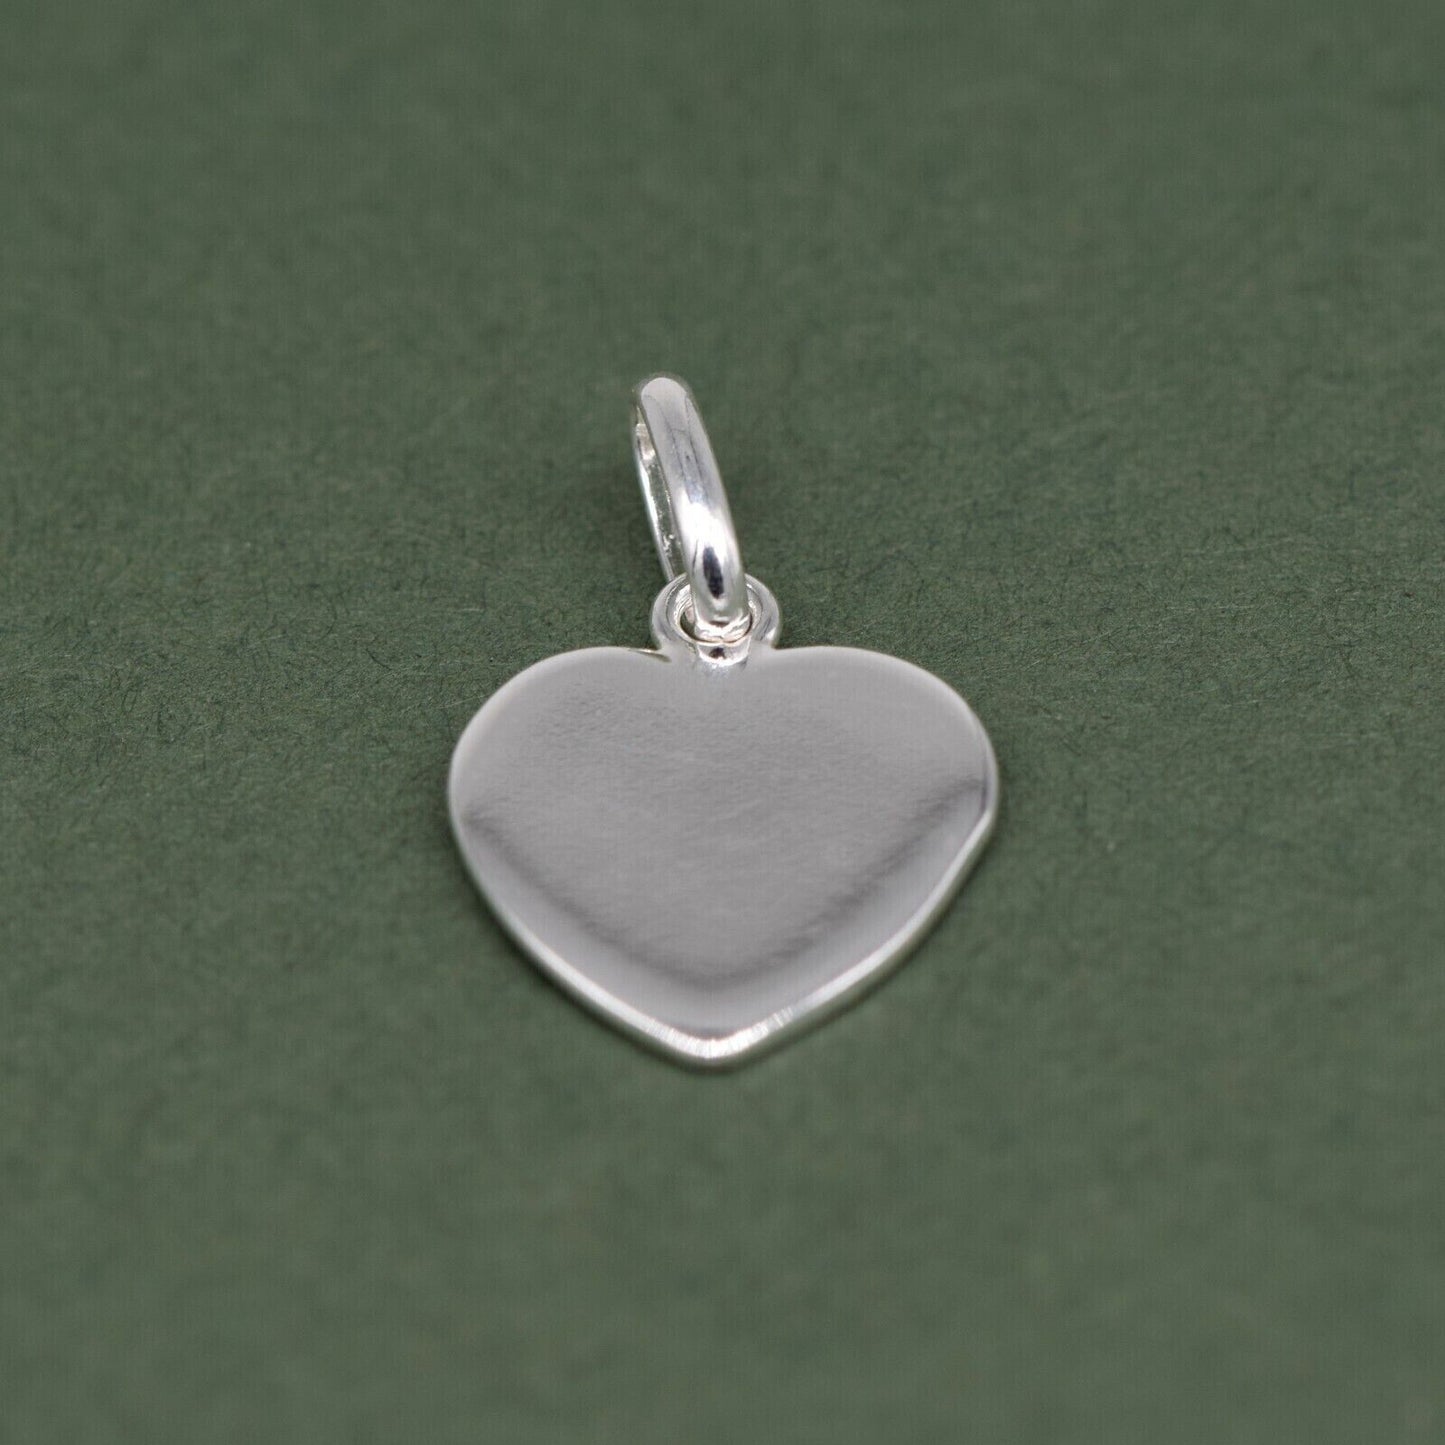 Genuine 925 Sterling Silver Flat Heart Pendant